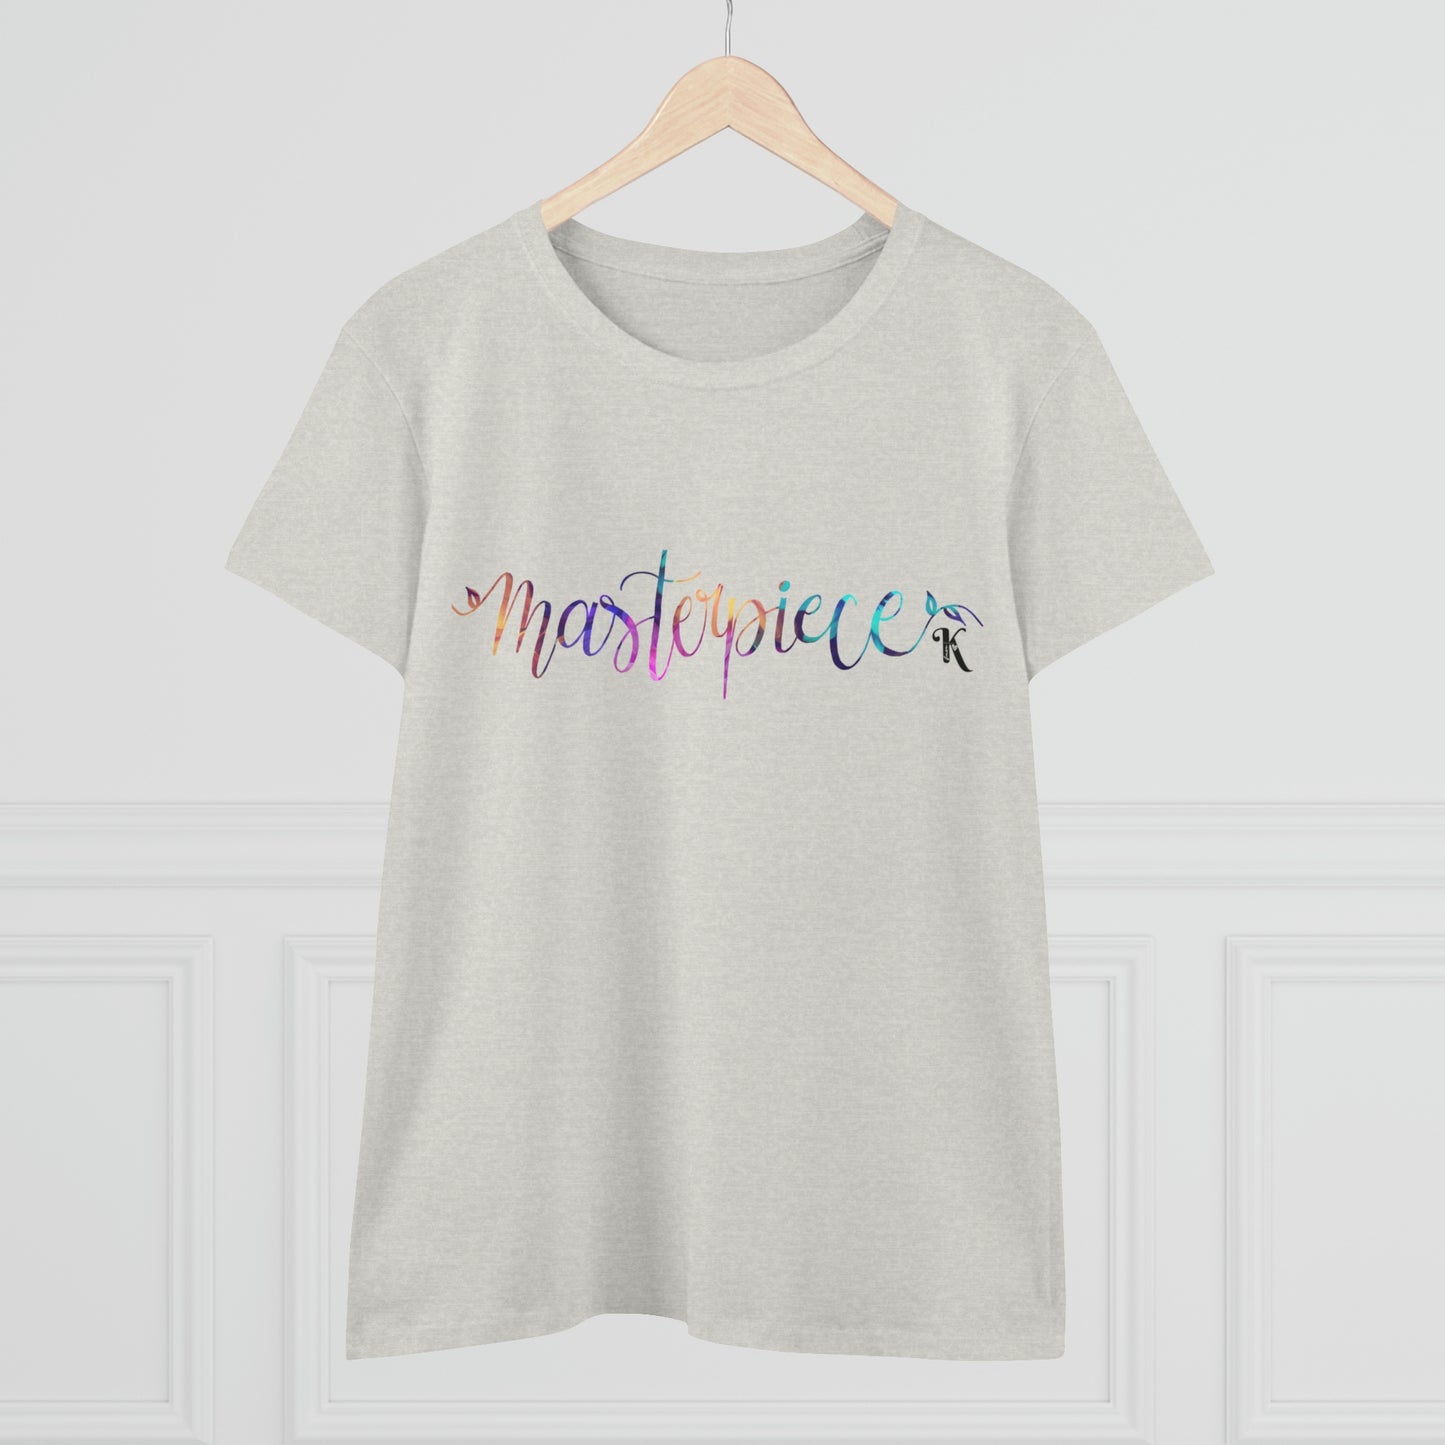 Masterpiece e2.10 > Women's Midweight Cotton Tee / Camiseta de algodón para mujer (Colorful)